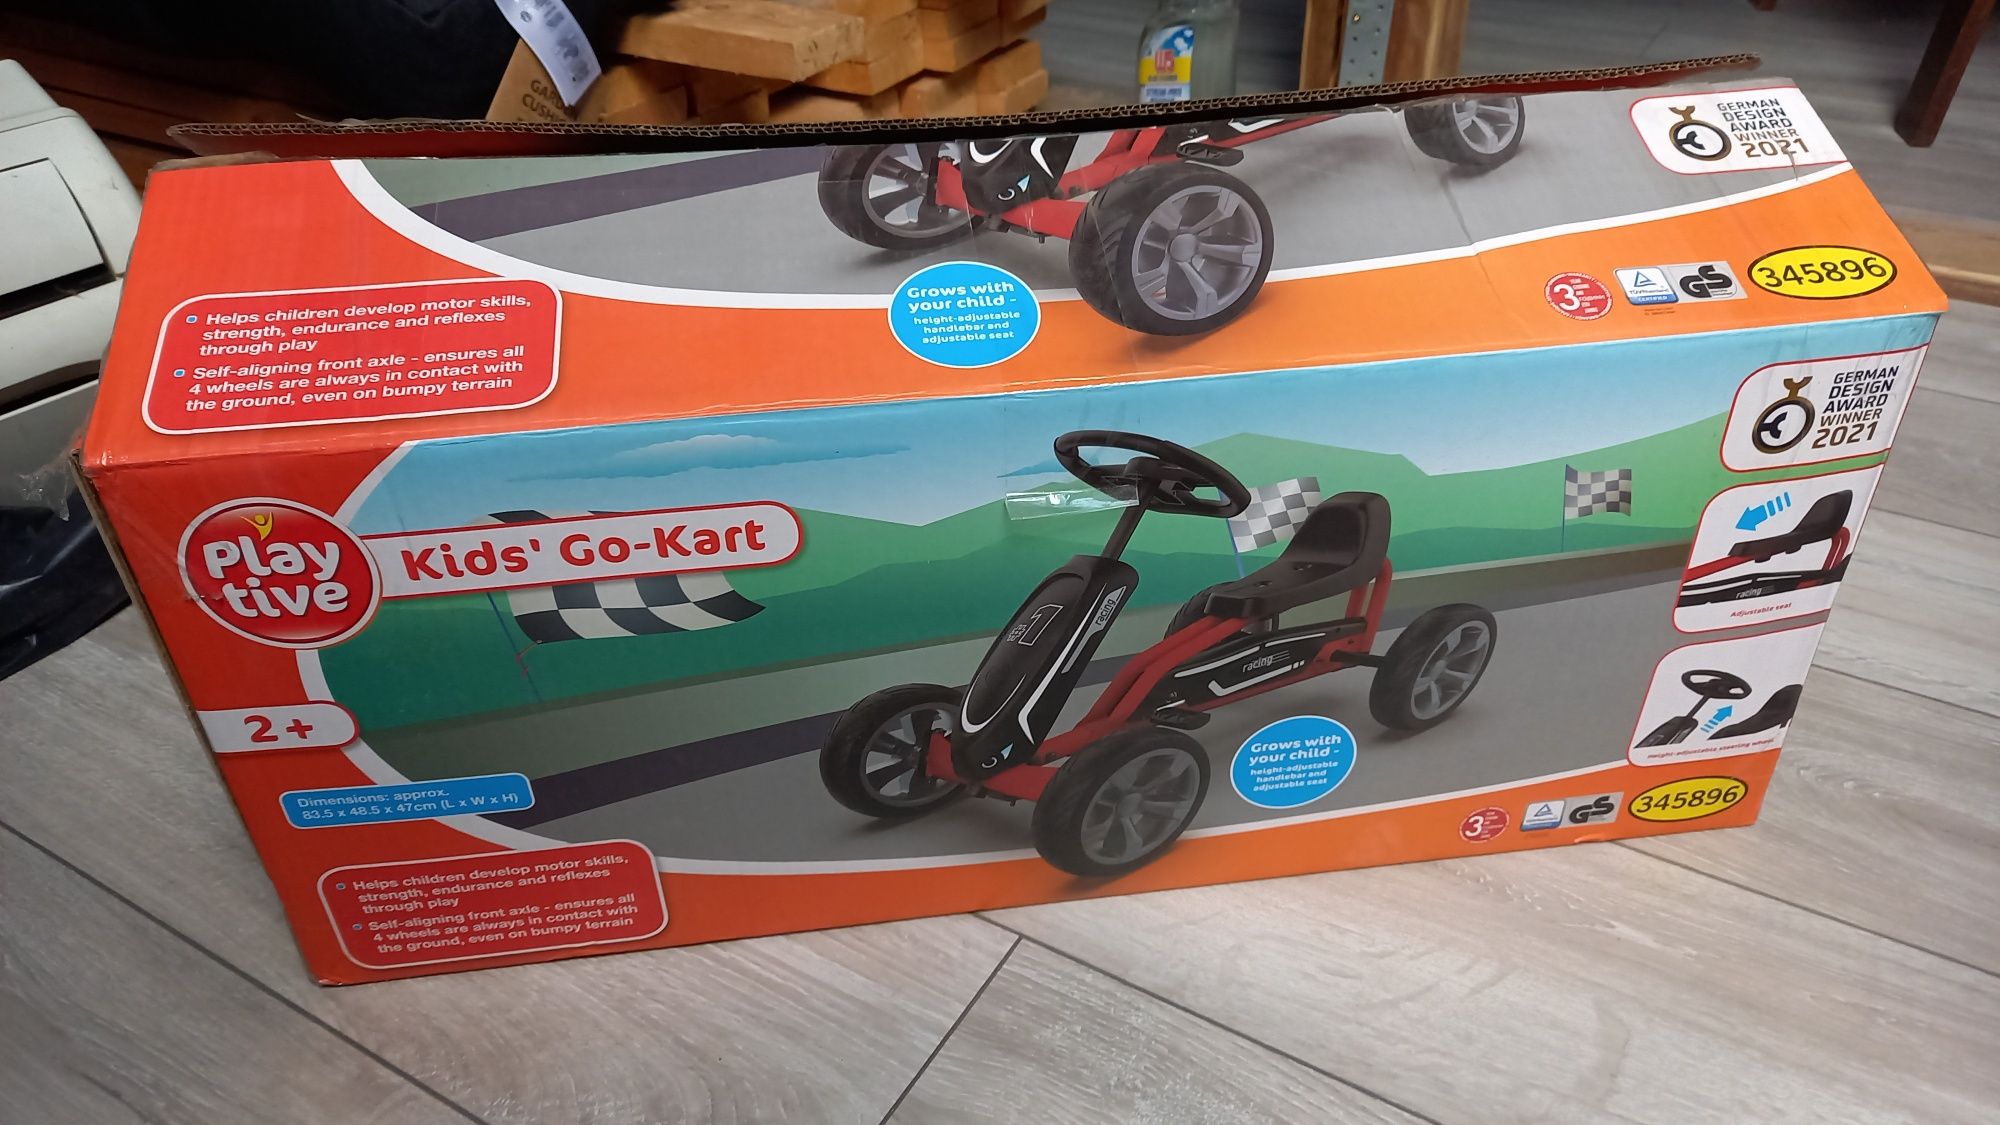 Детска количка с педали